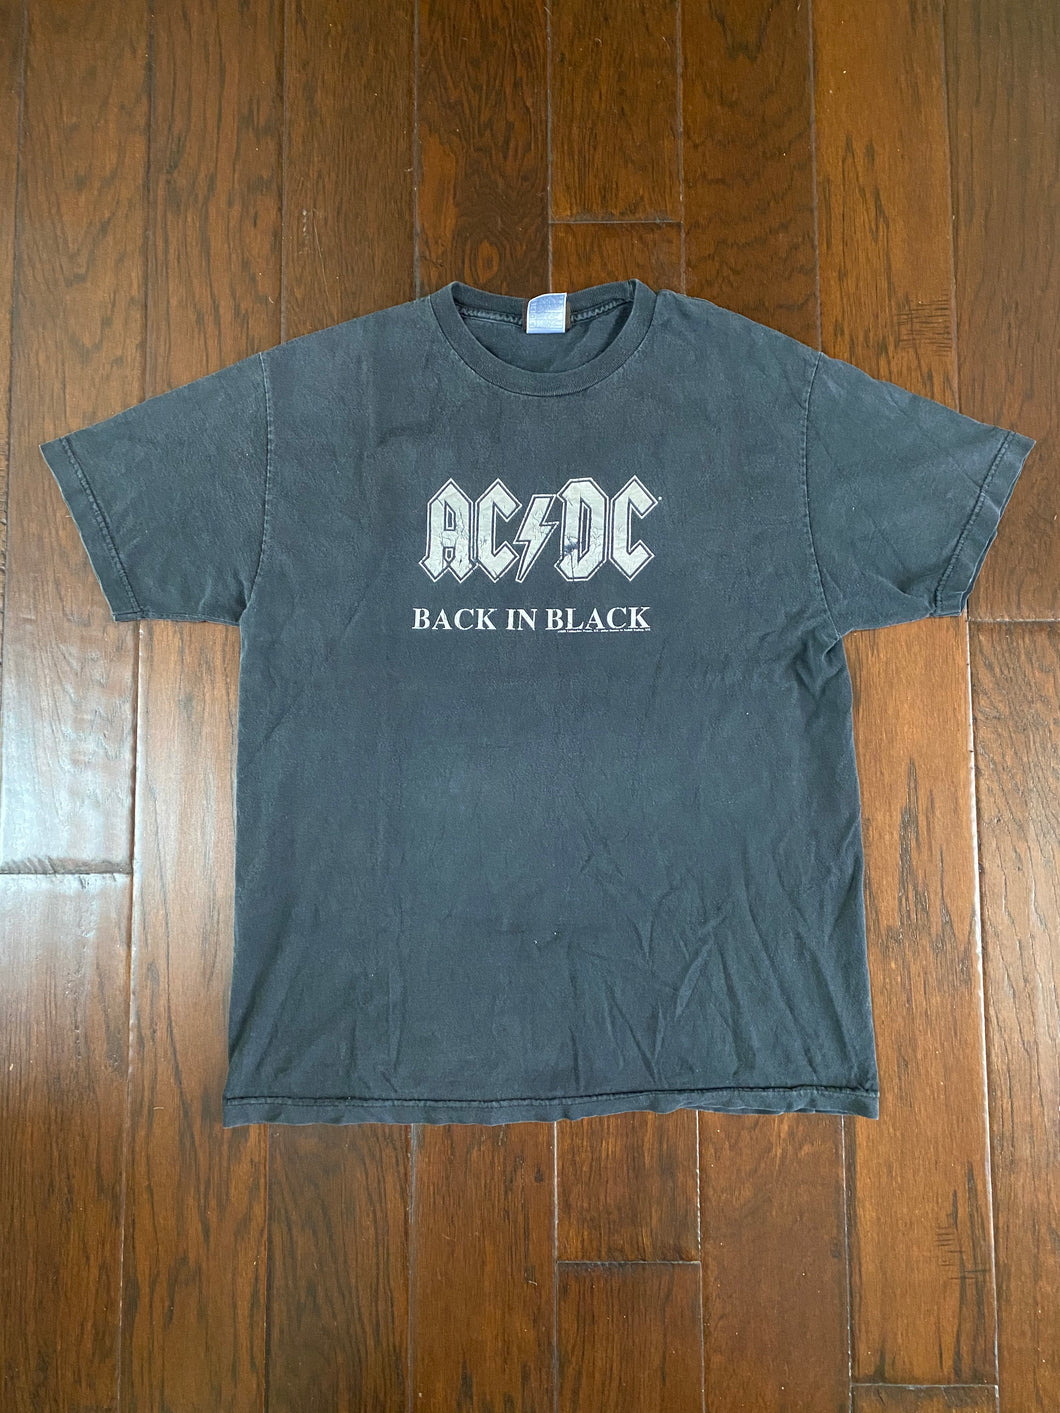 AC/DC 2005 “Back In Black” Vintage Distressed T-shirt